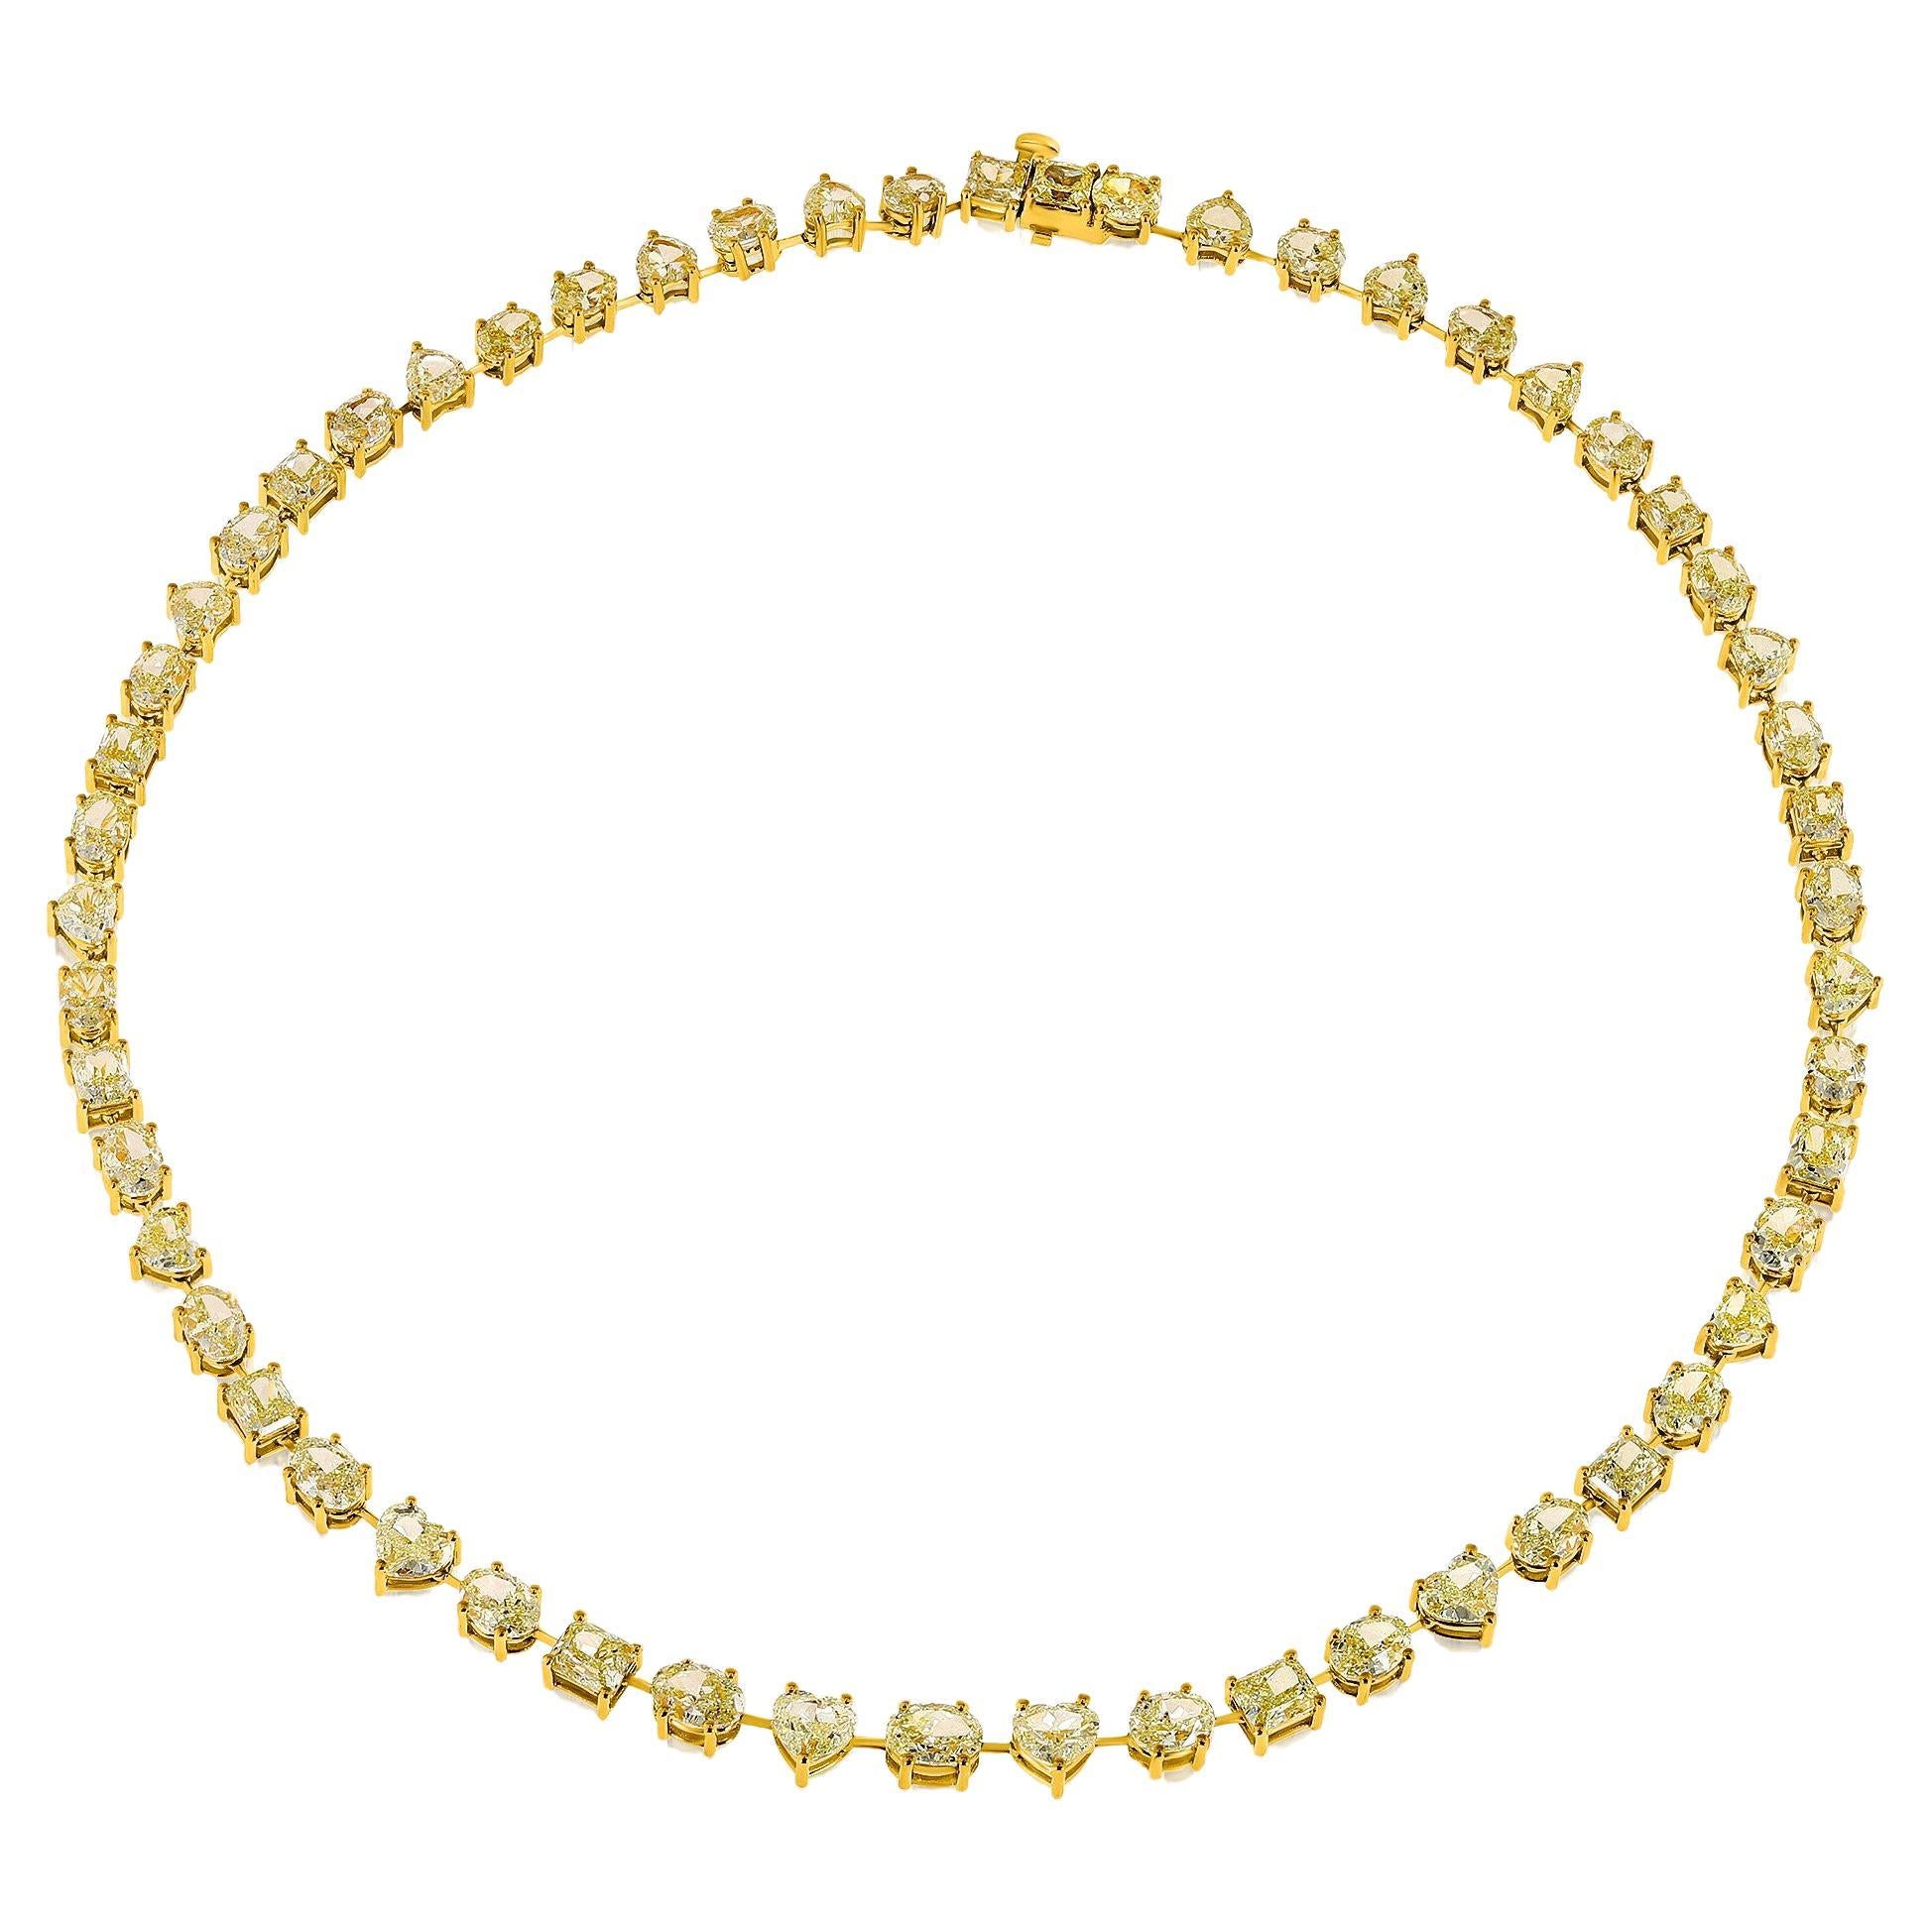 Collier de diamants jaunes de 30 carats de forme mixte, en or jaune 18 carats. en vente